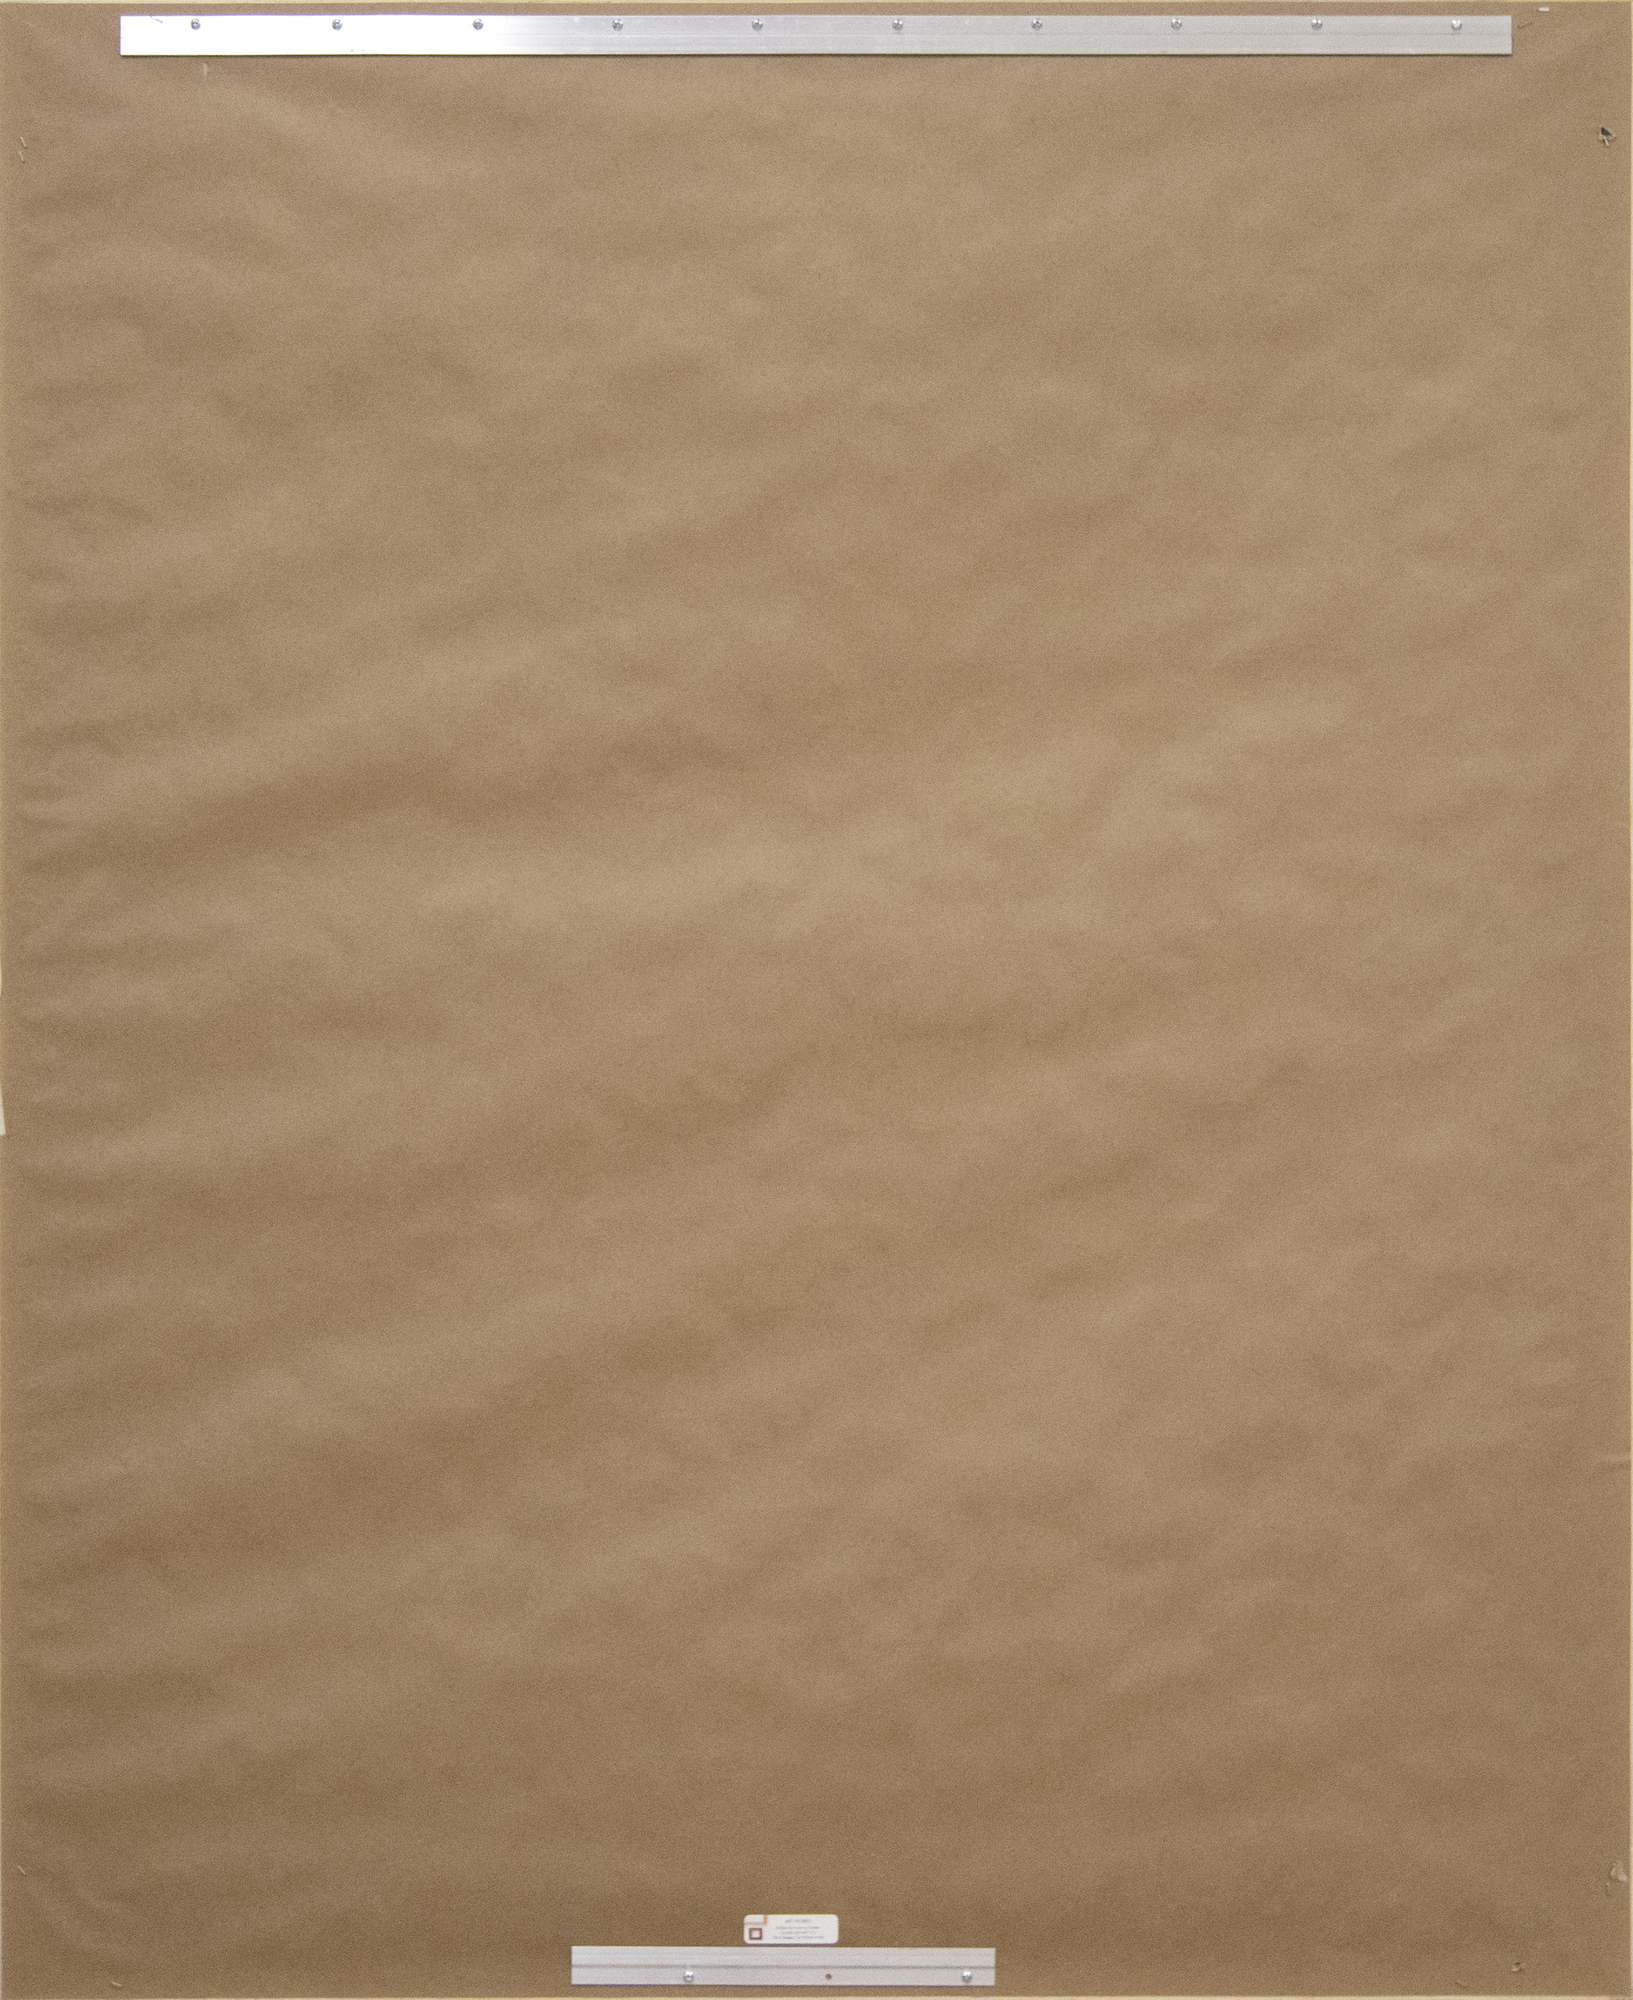 JAE KON PARK - Ohne Titel - Öl auf Leinwand - 45 3/4 x 35 1/2 in.